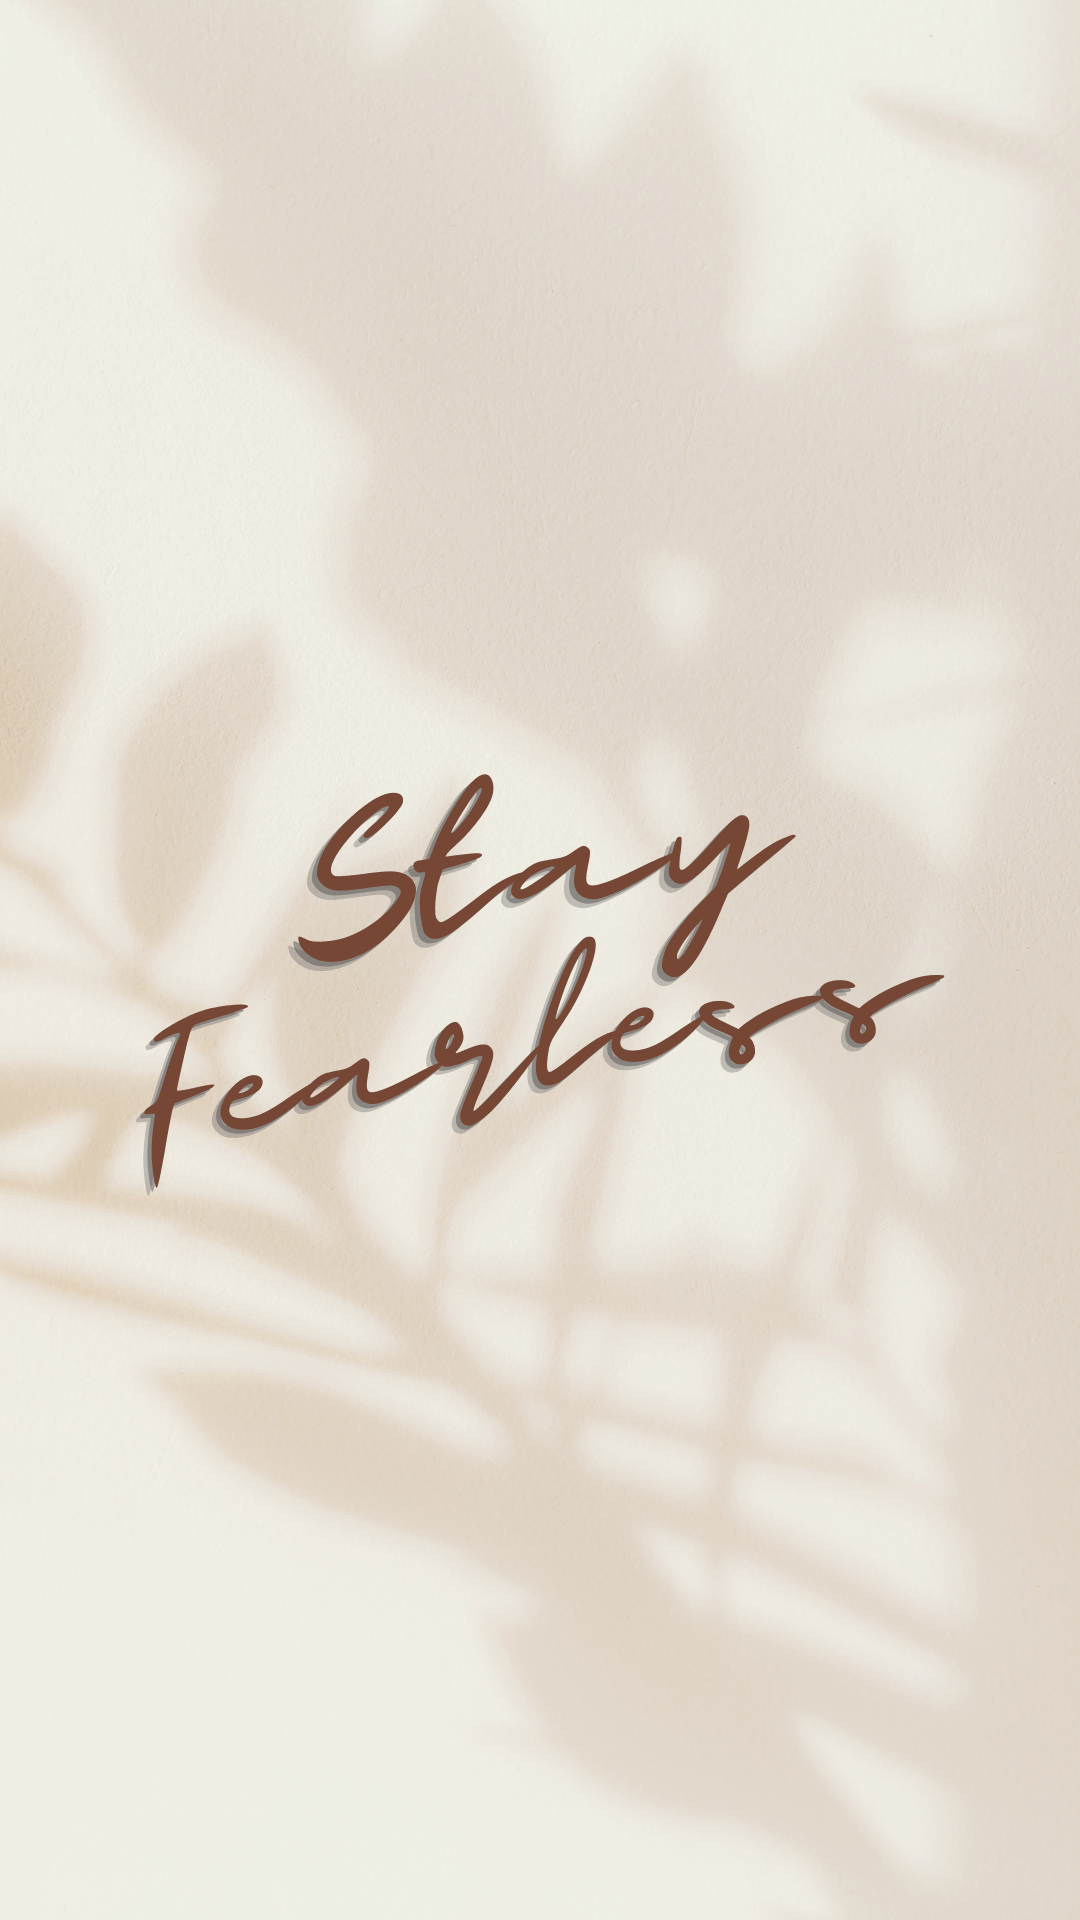 Stay fearless. - Cute, cute iPhone